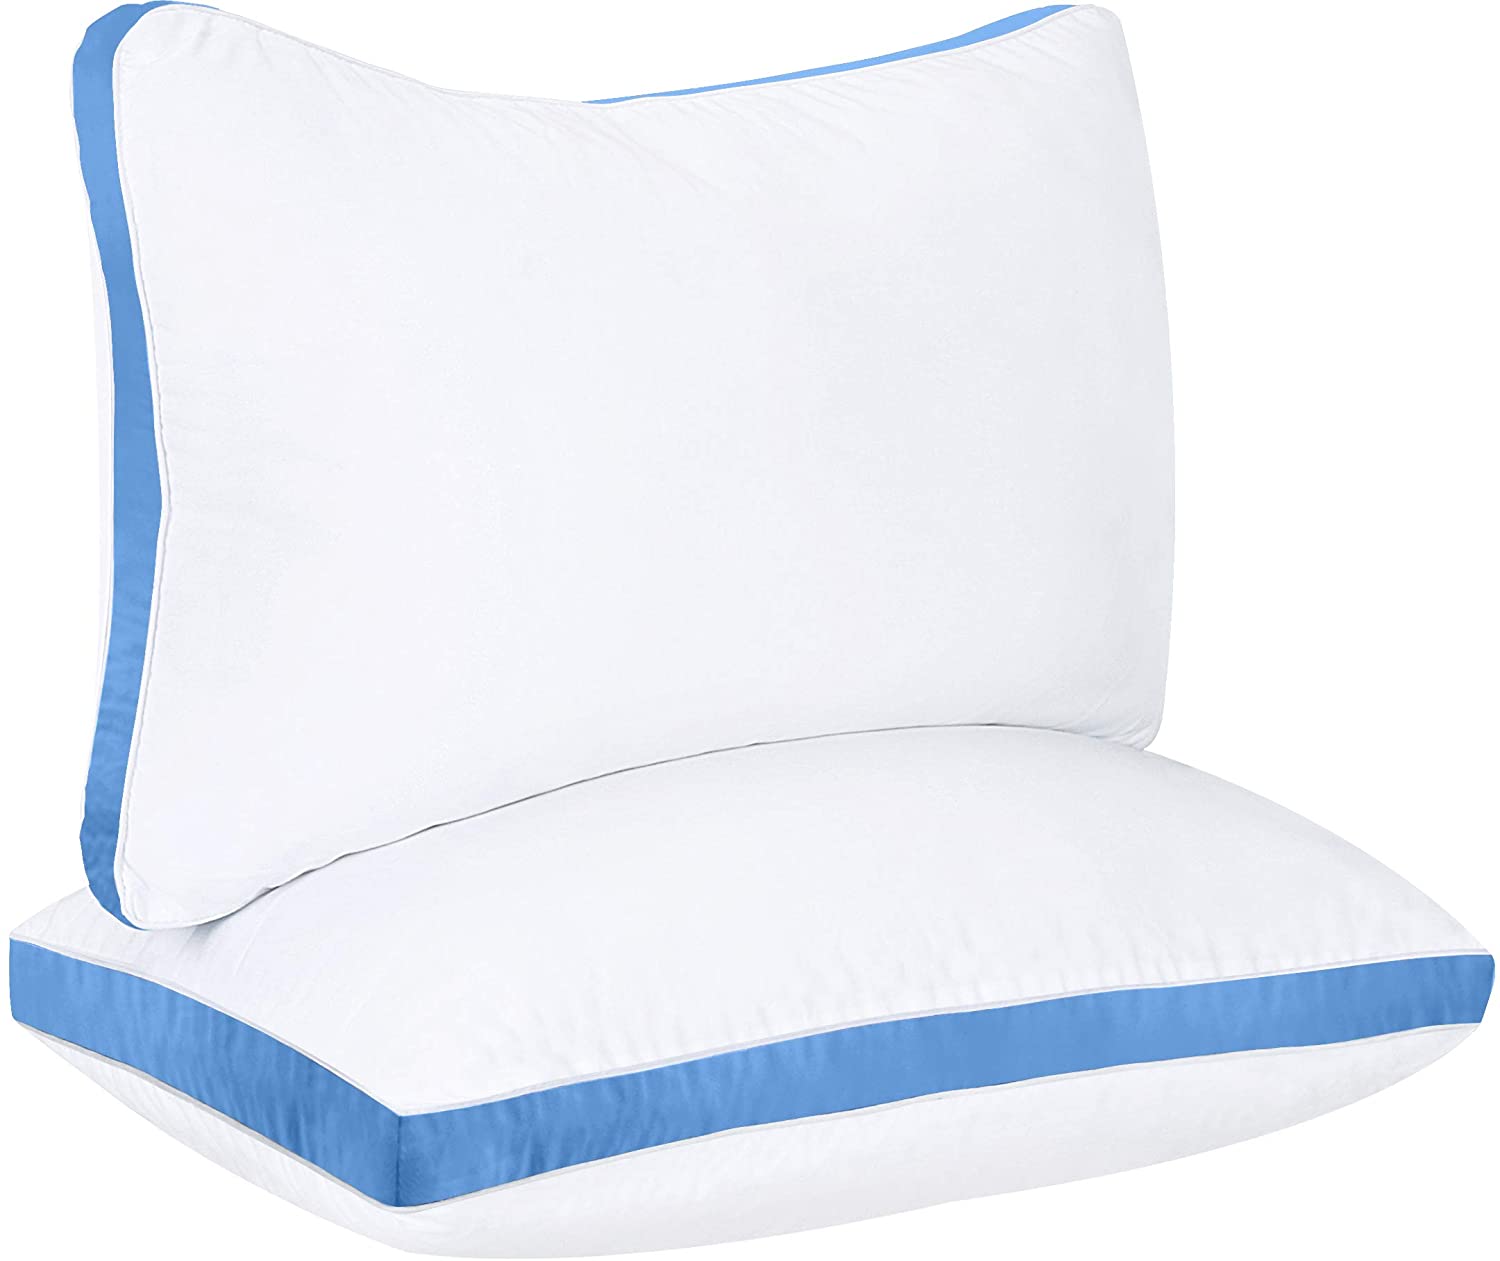 Utopia Bedding Polyfiber Filled Pillows, 2-Pack